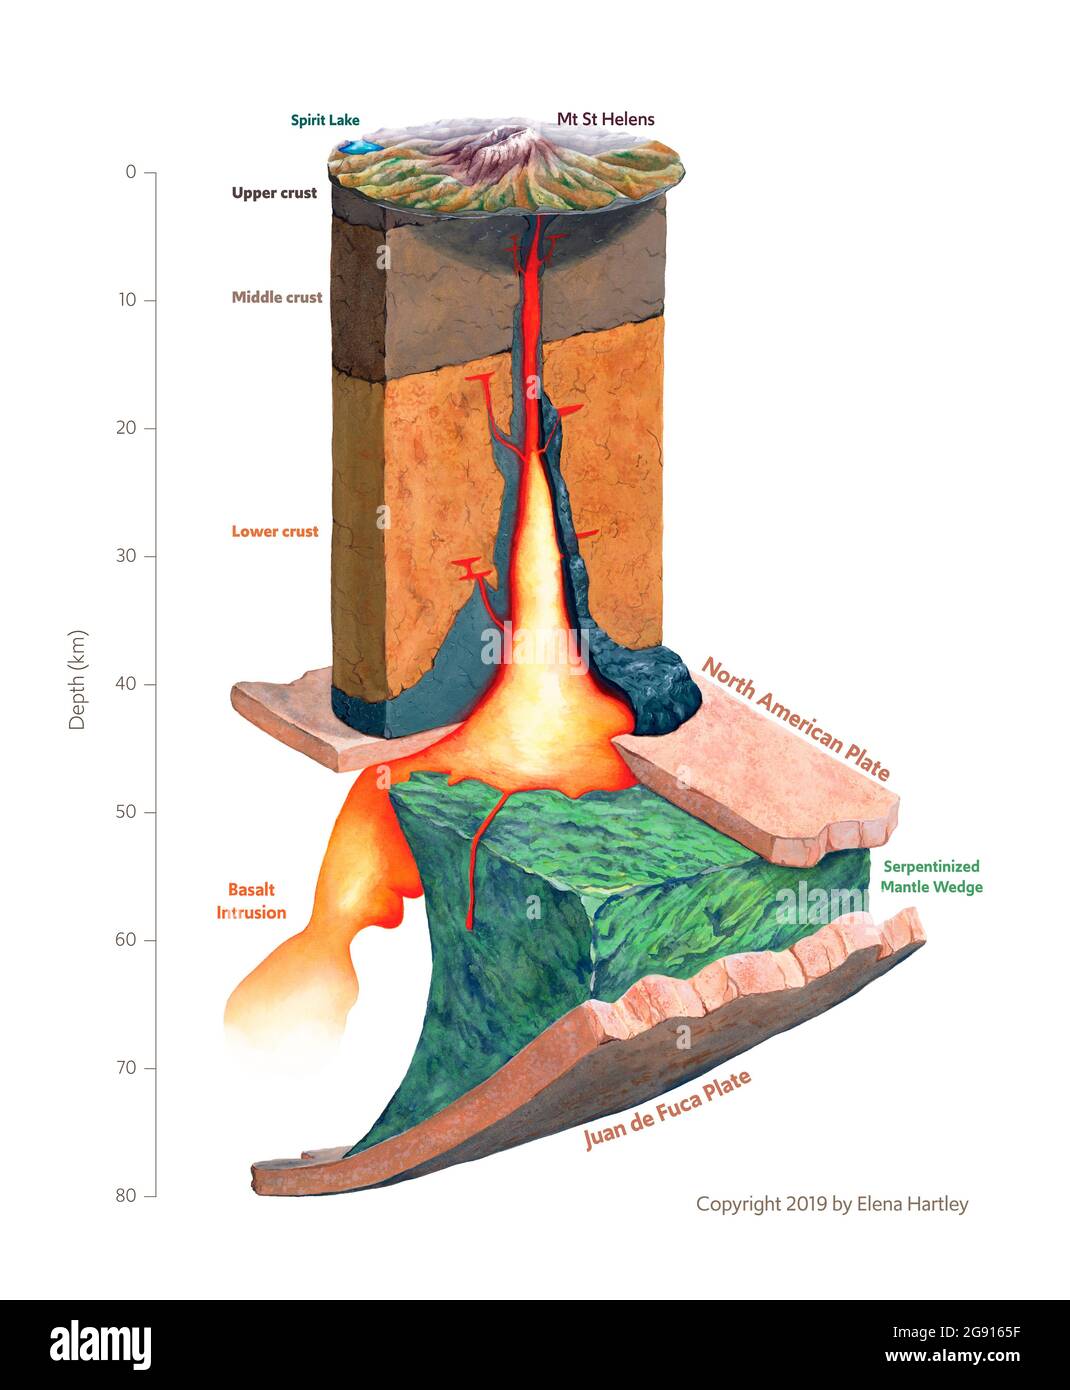 Mt. Système de plomberie magma St. Helens, illustration Banque D'Images